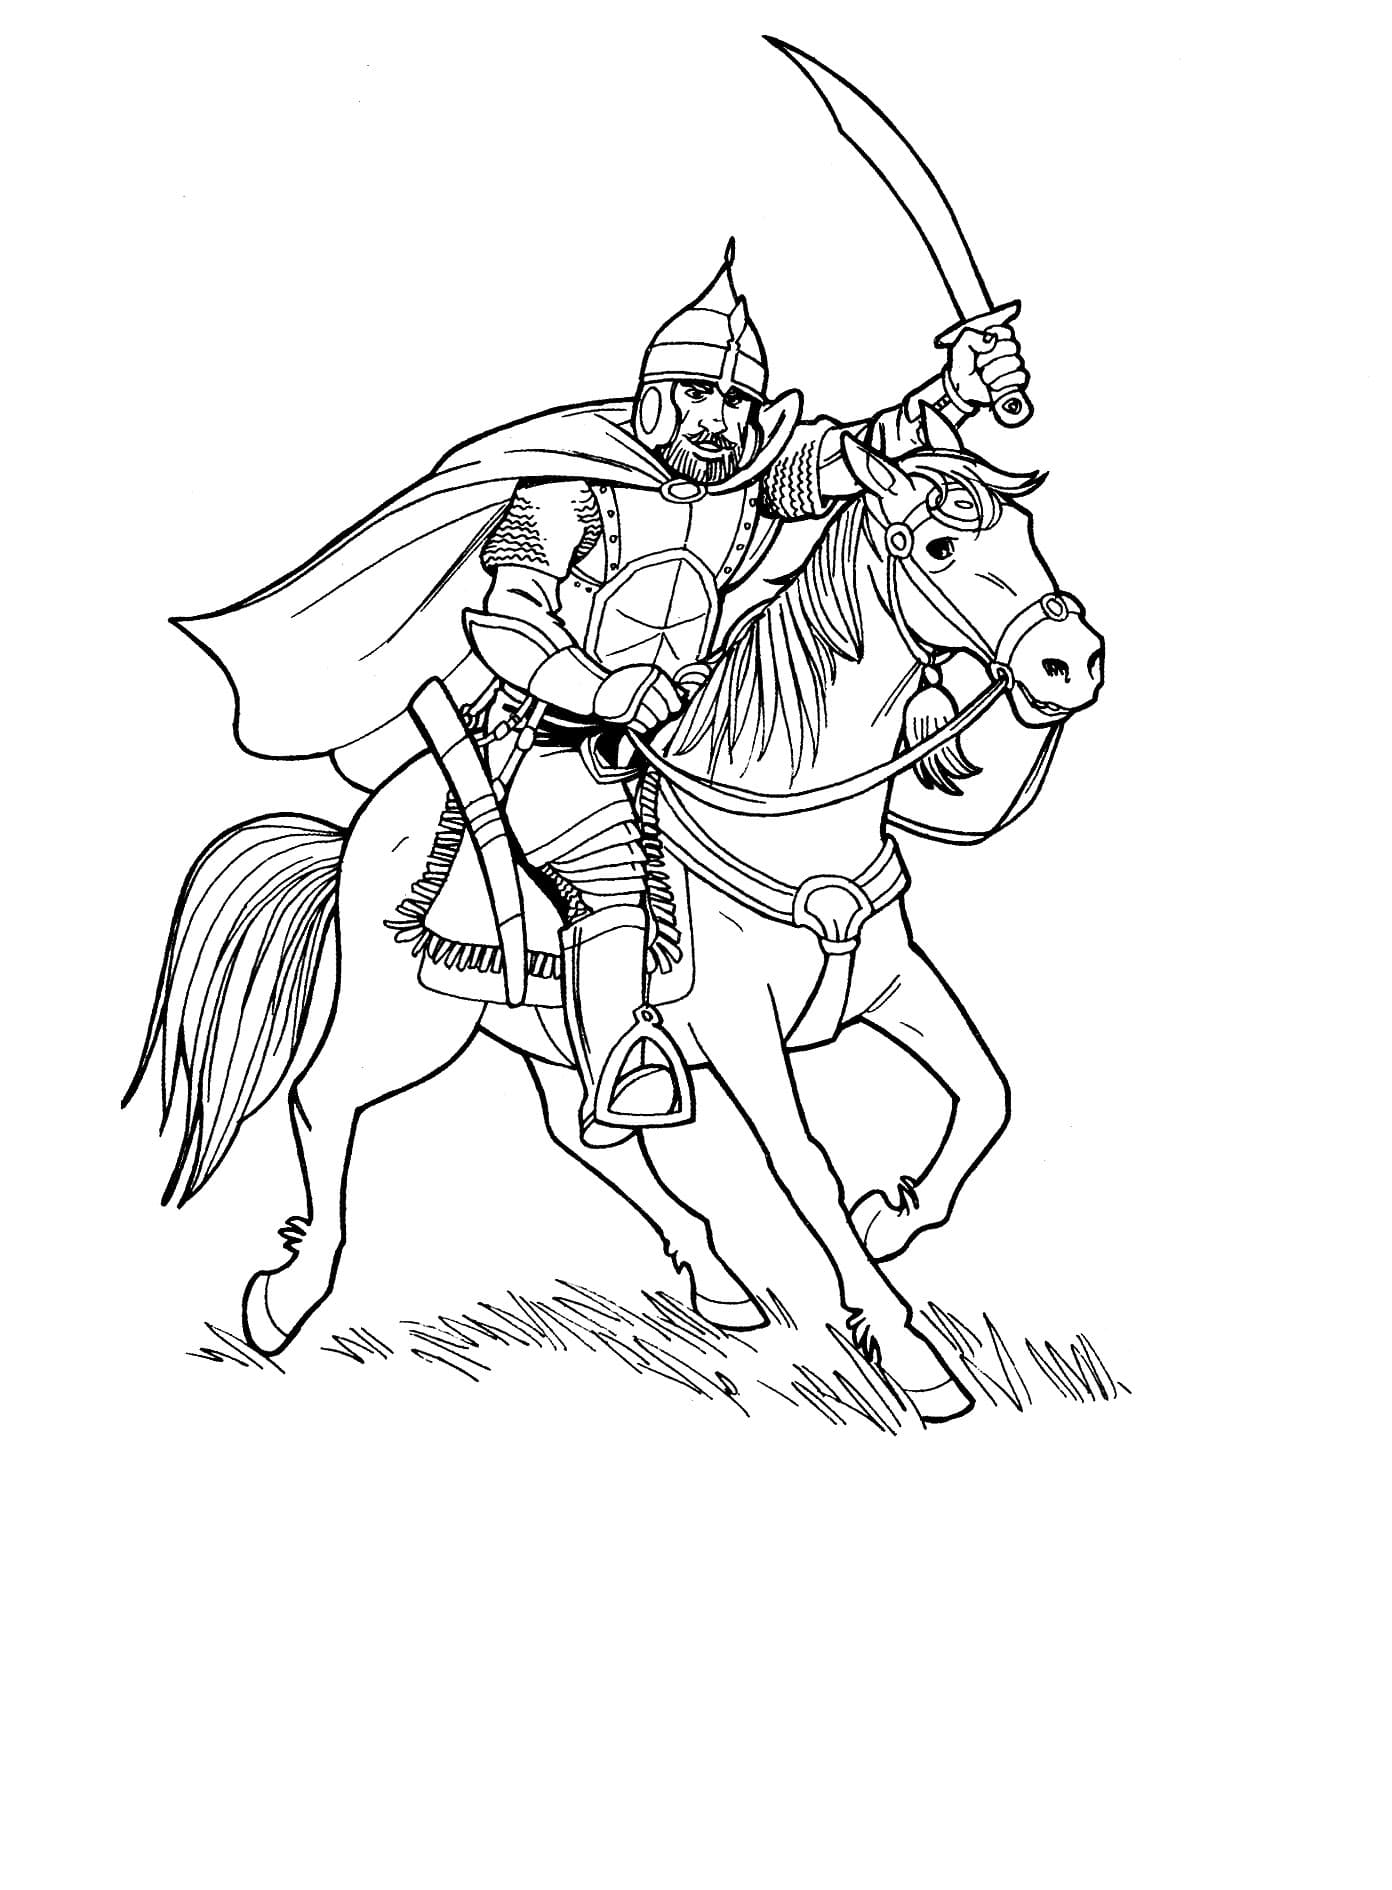 Ёогатырь с мечом на лошади